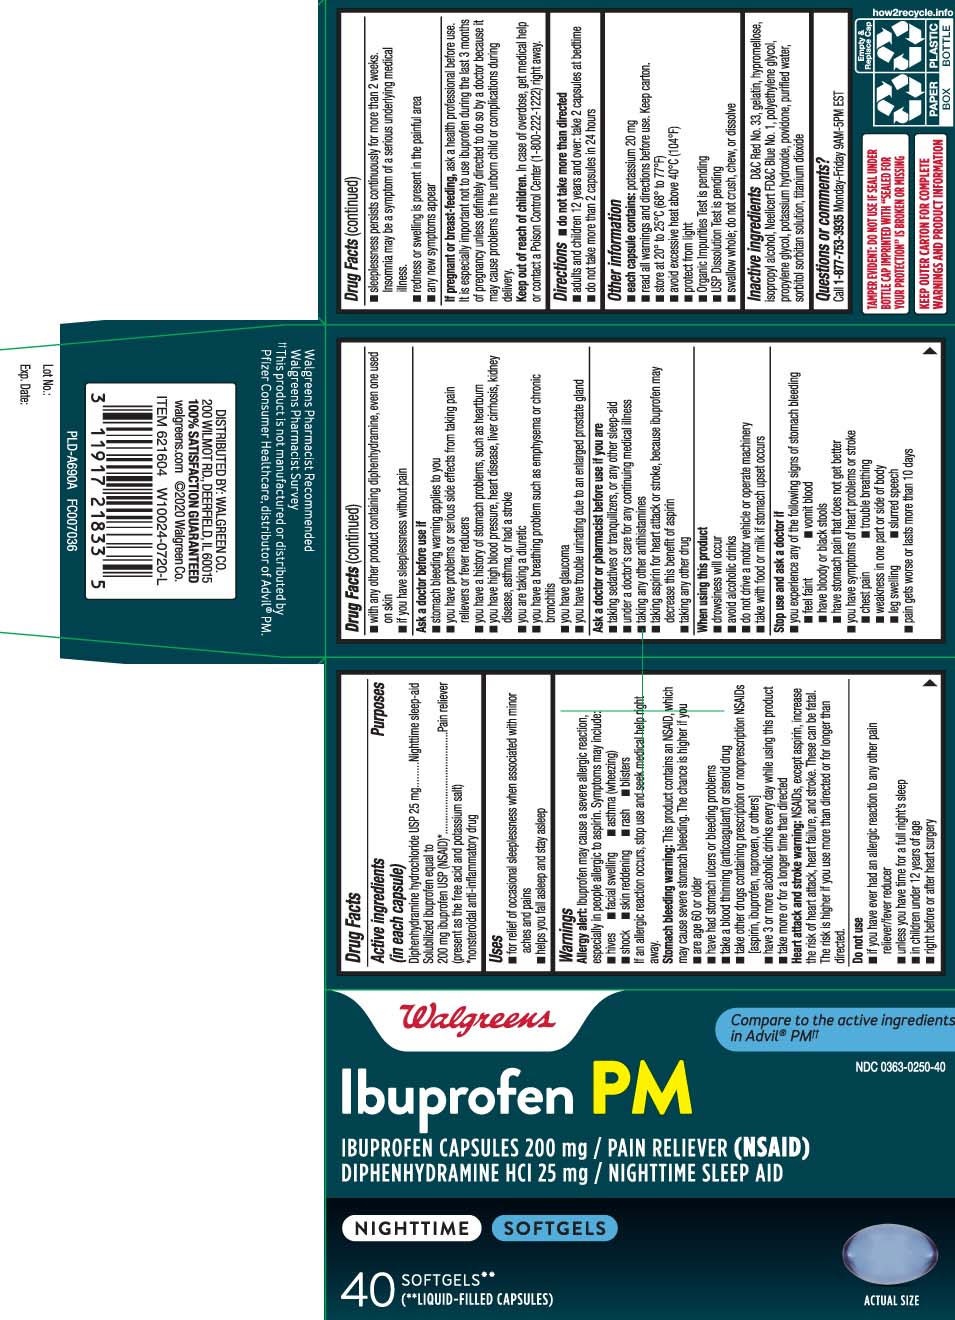 Diphenhydramine hydrochloride USP 25 mg Solubilized ibuprofen equal to 200 mg Ibuprofen USP (NSAID)* (present as the free acid and potassium salt) *nonsteroidal anti-inflammatory drug